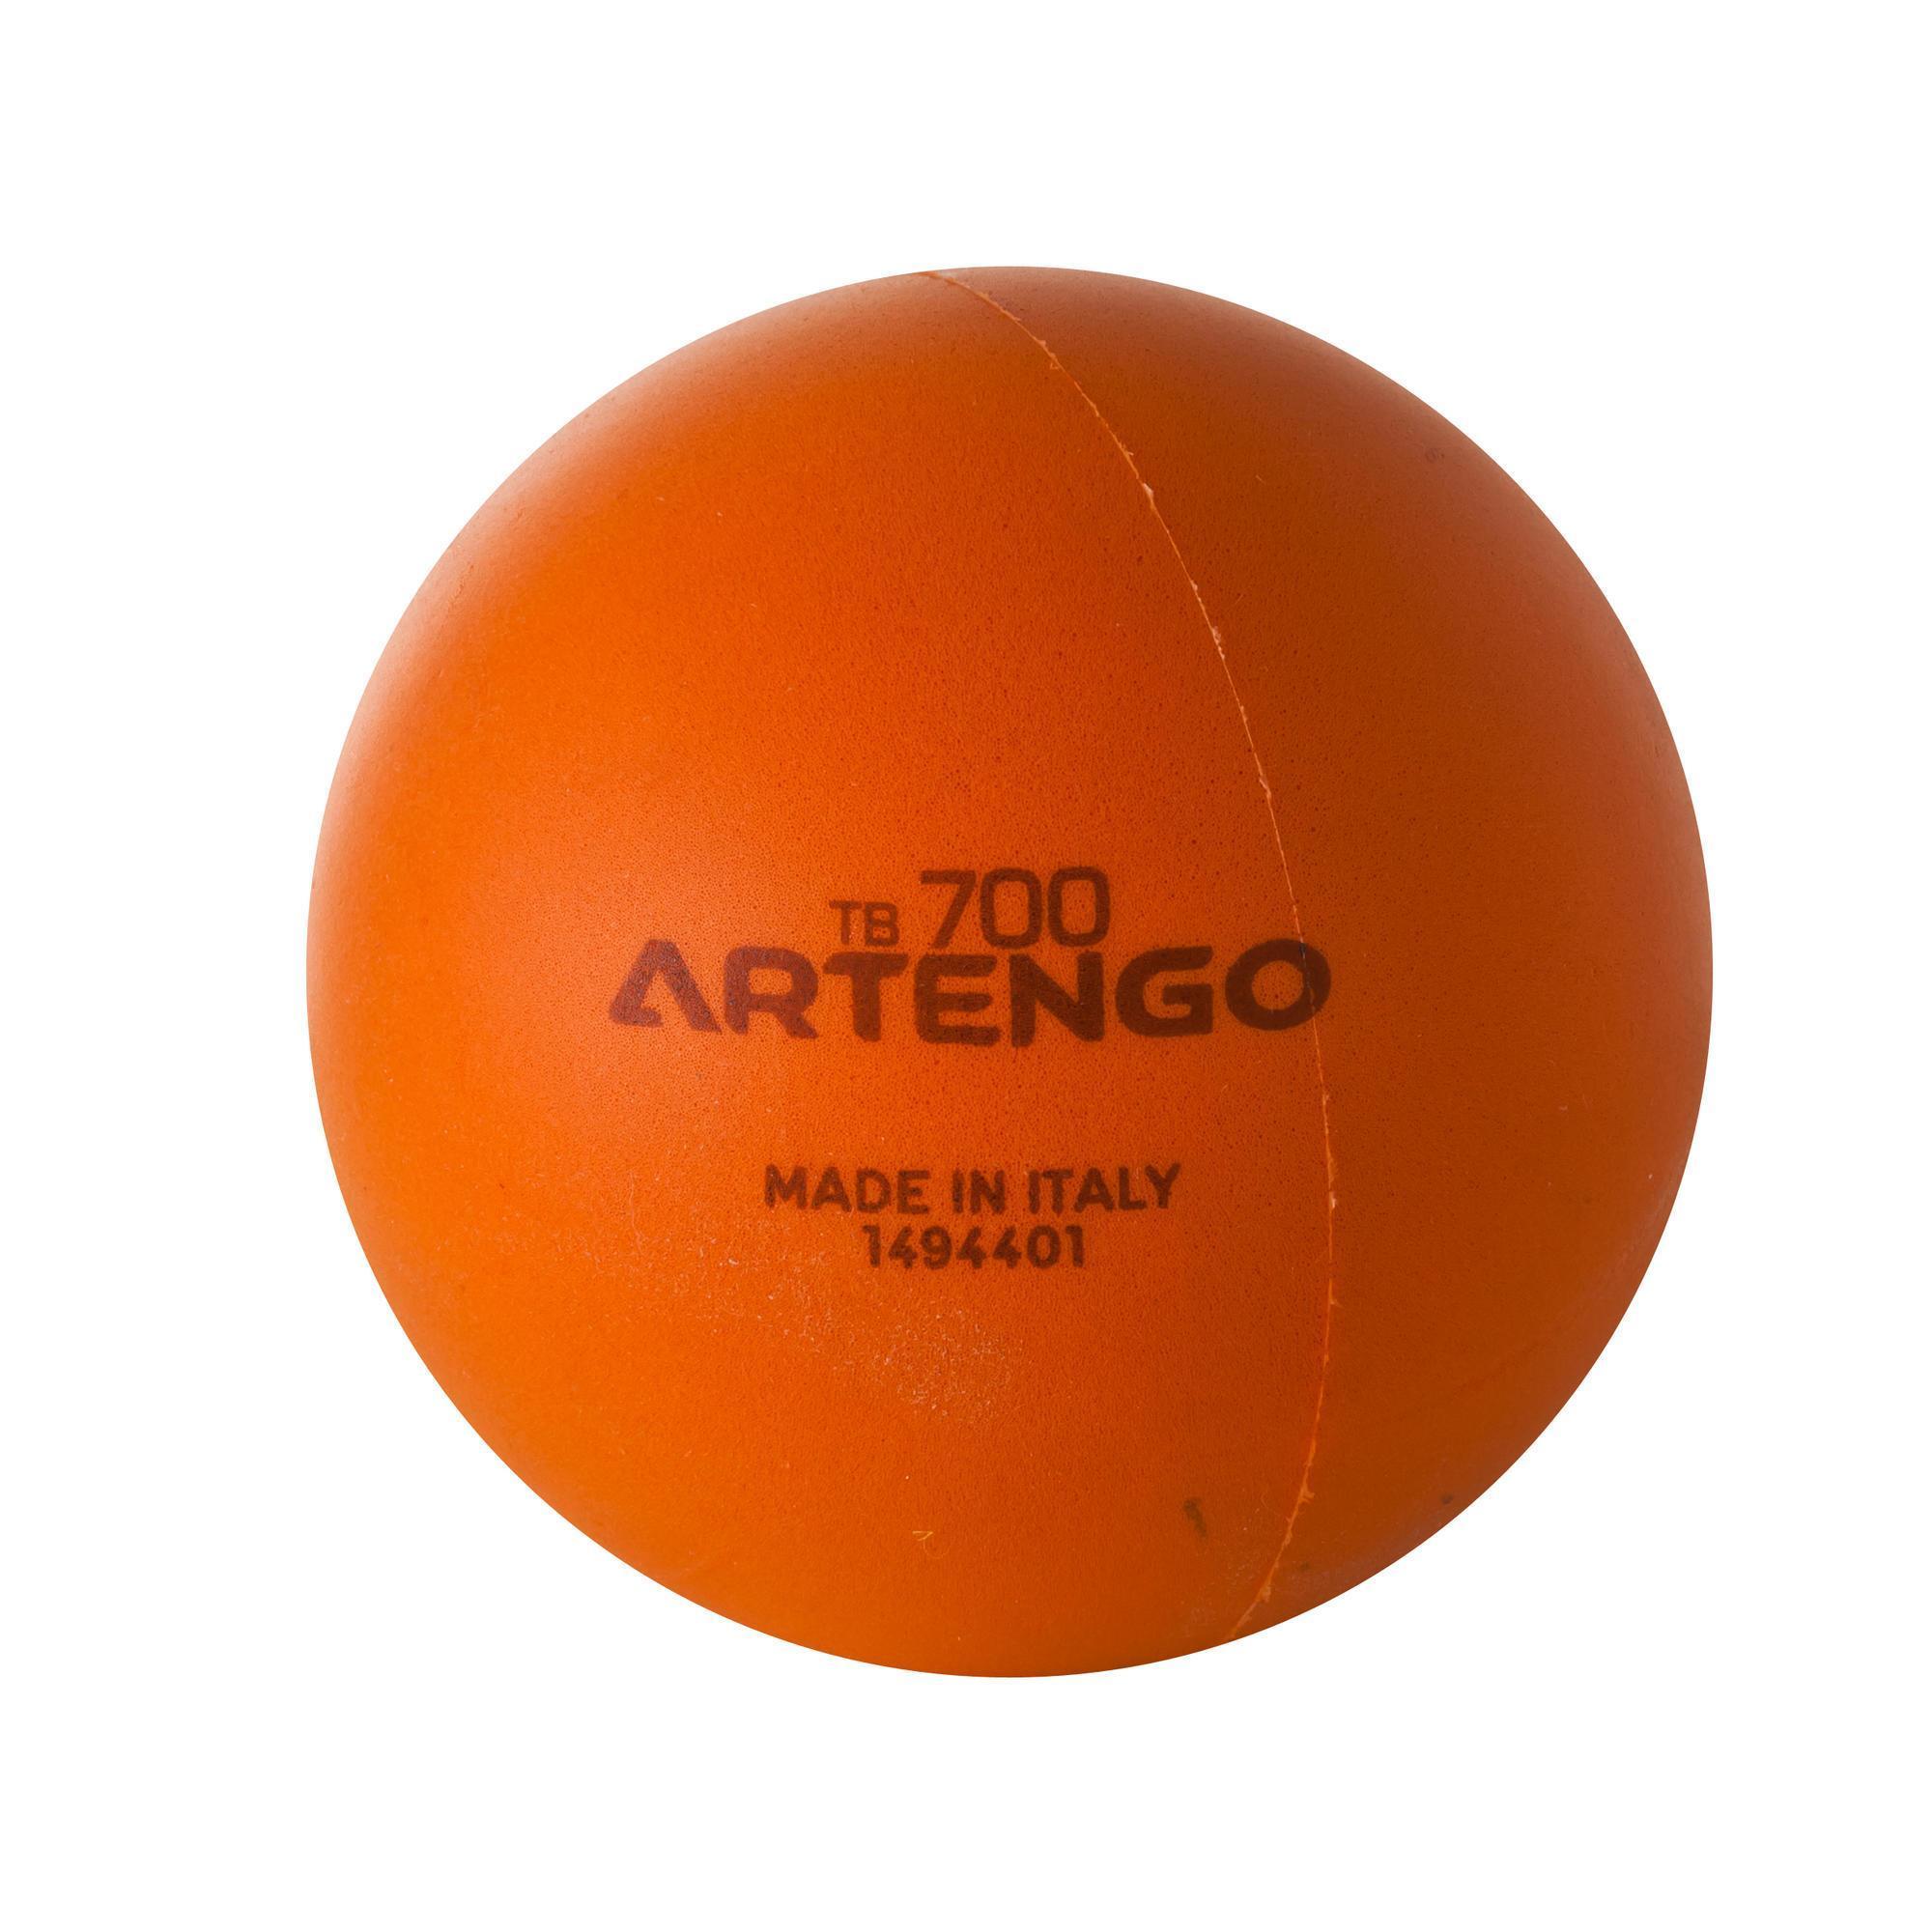 artengo ball